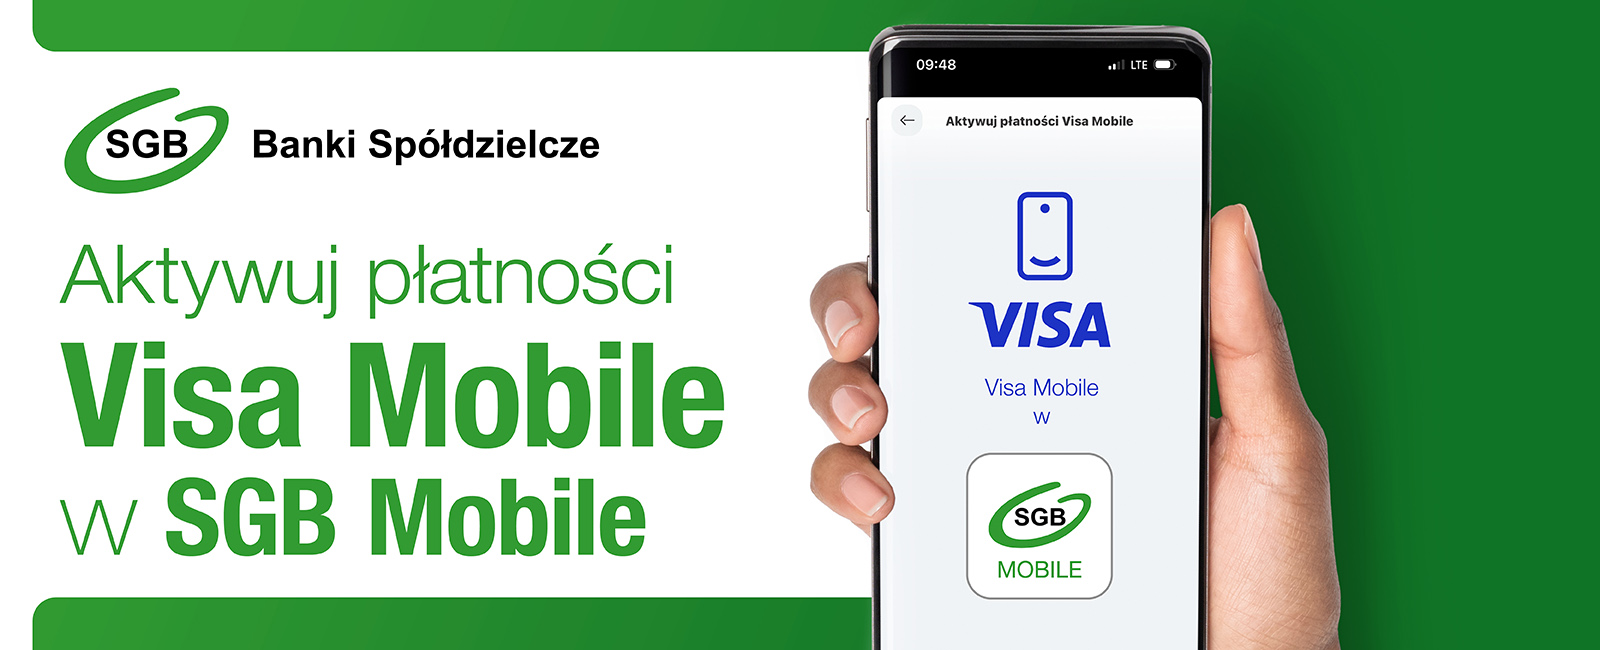 Usługa płatności Visa Mobile